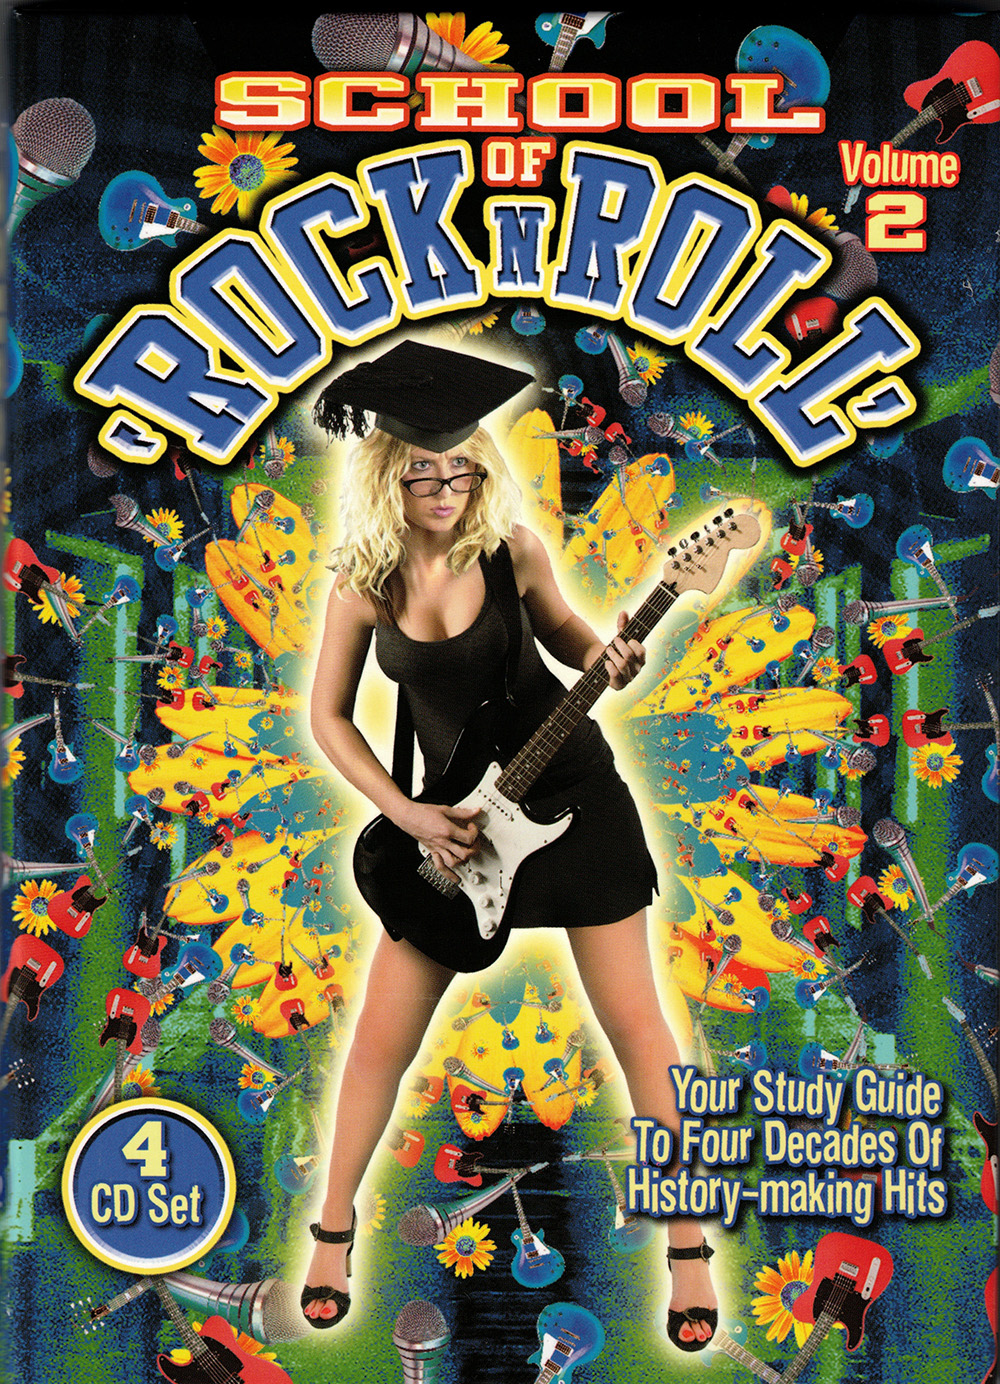 School Of Rock & Roll, Vol. 2 (4 CD)